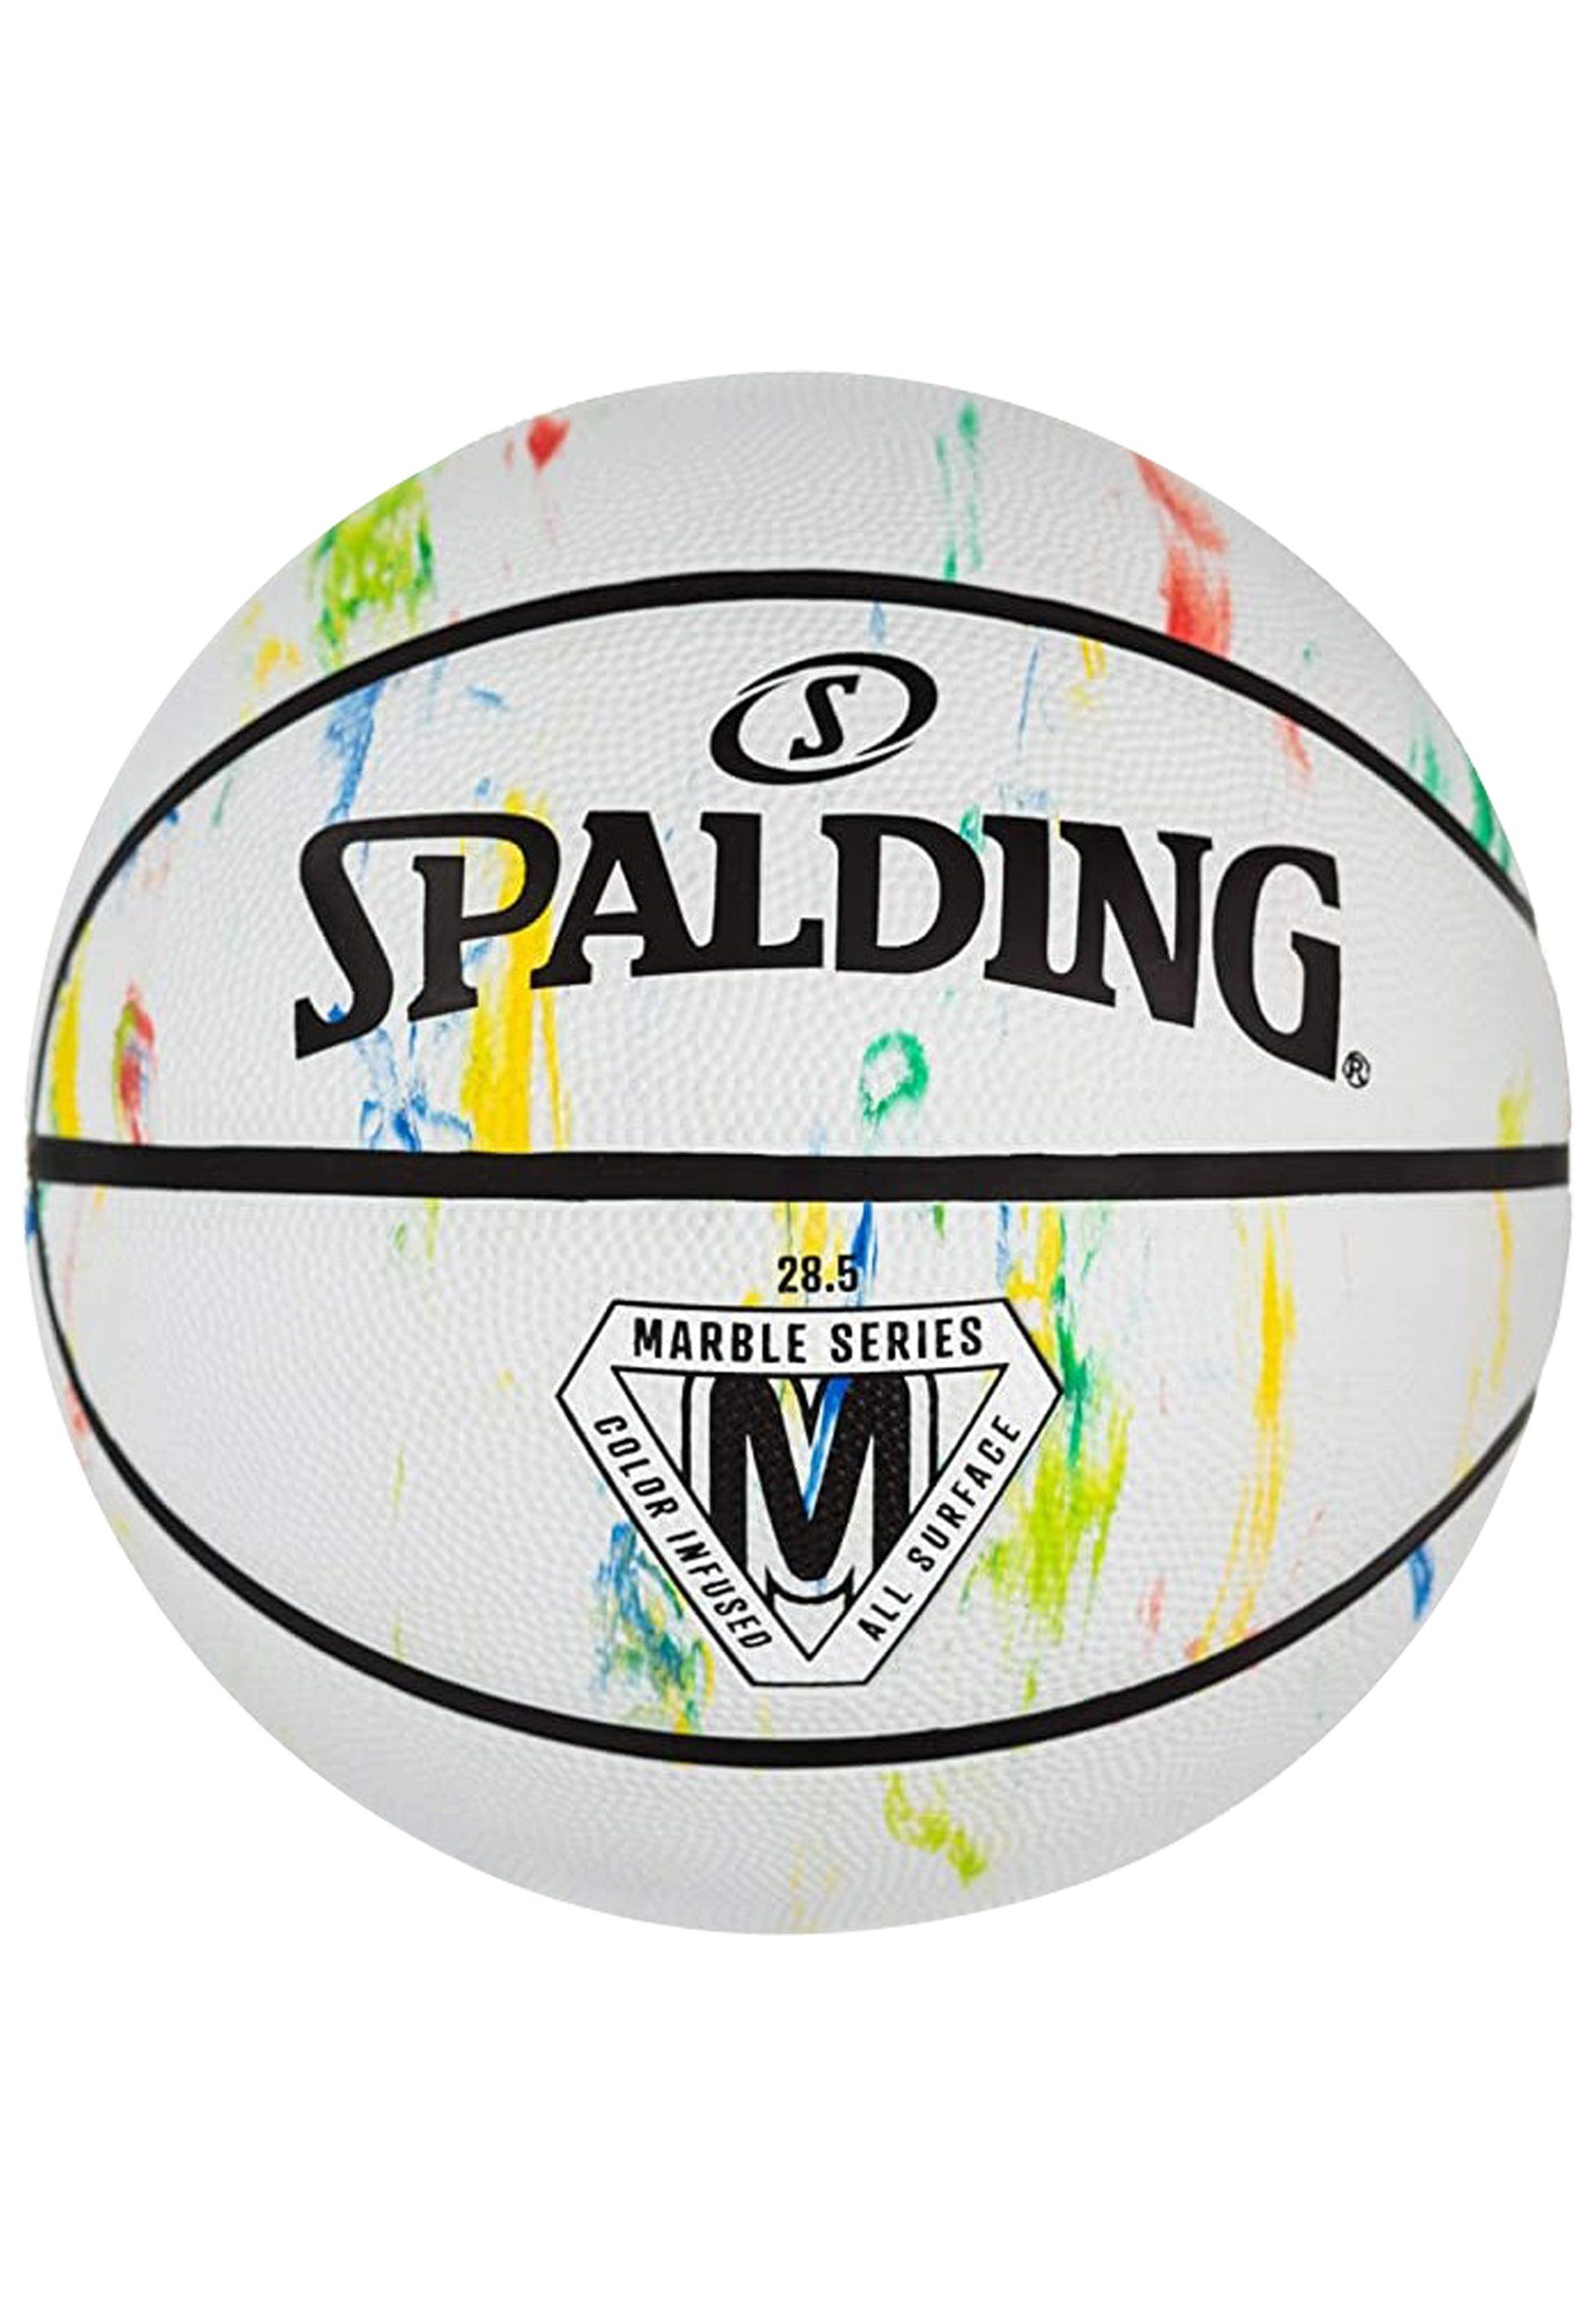 Fußball Spalding Marble Spalding